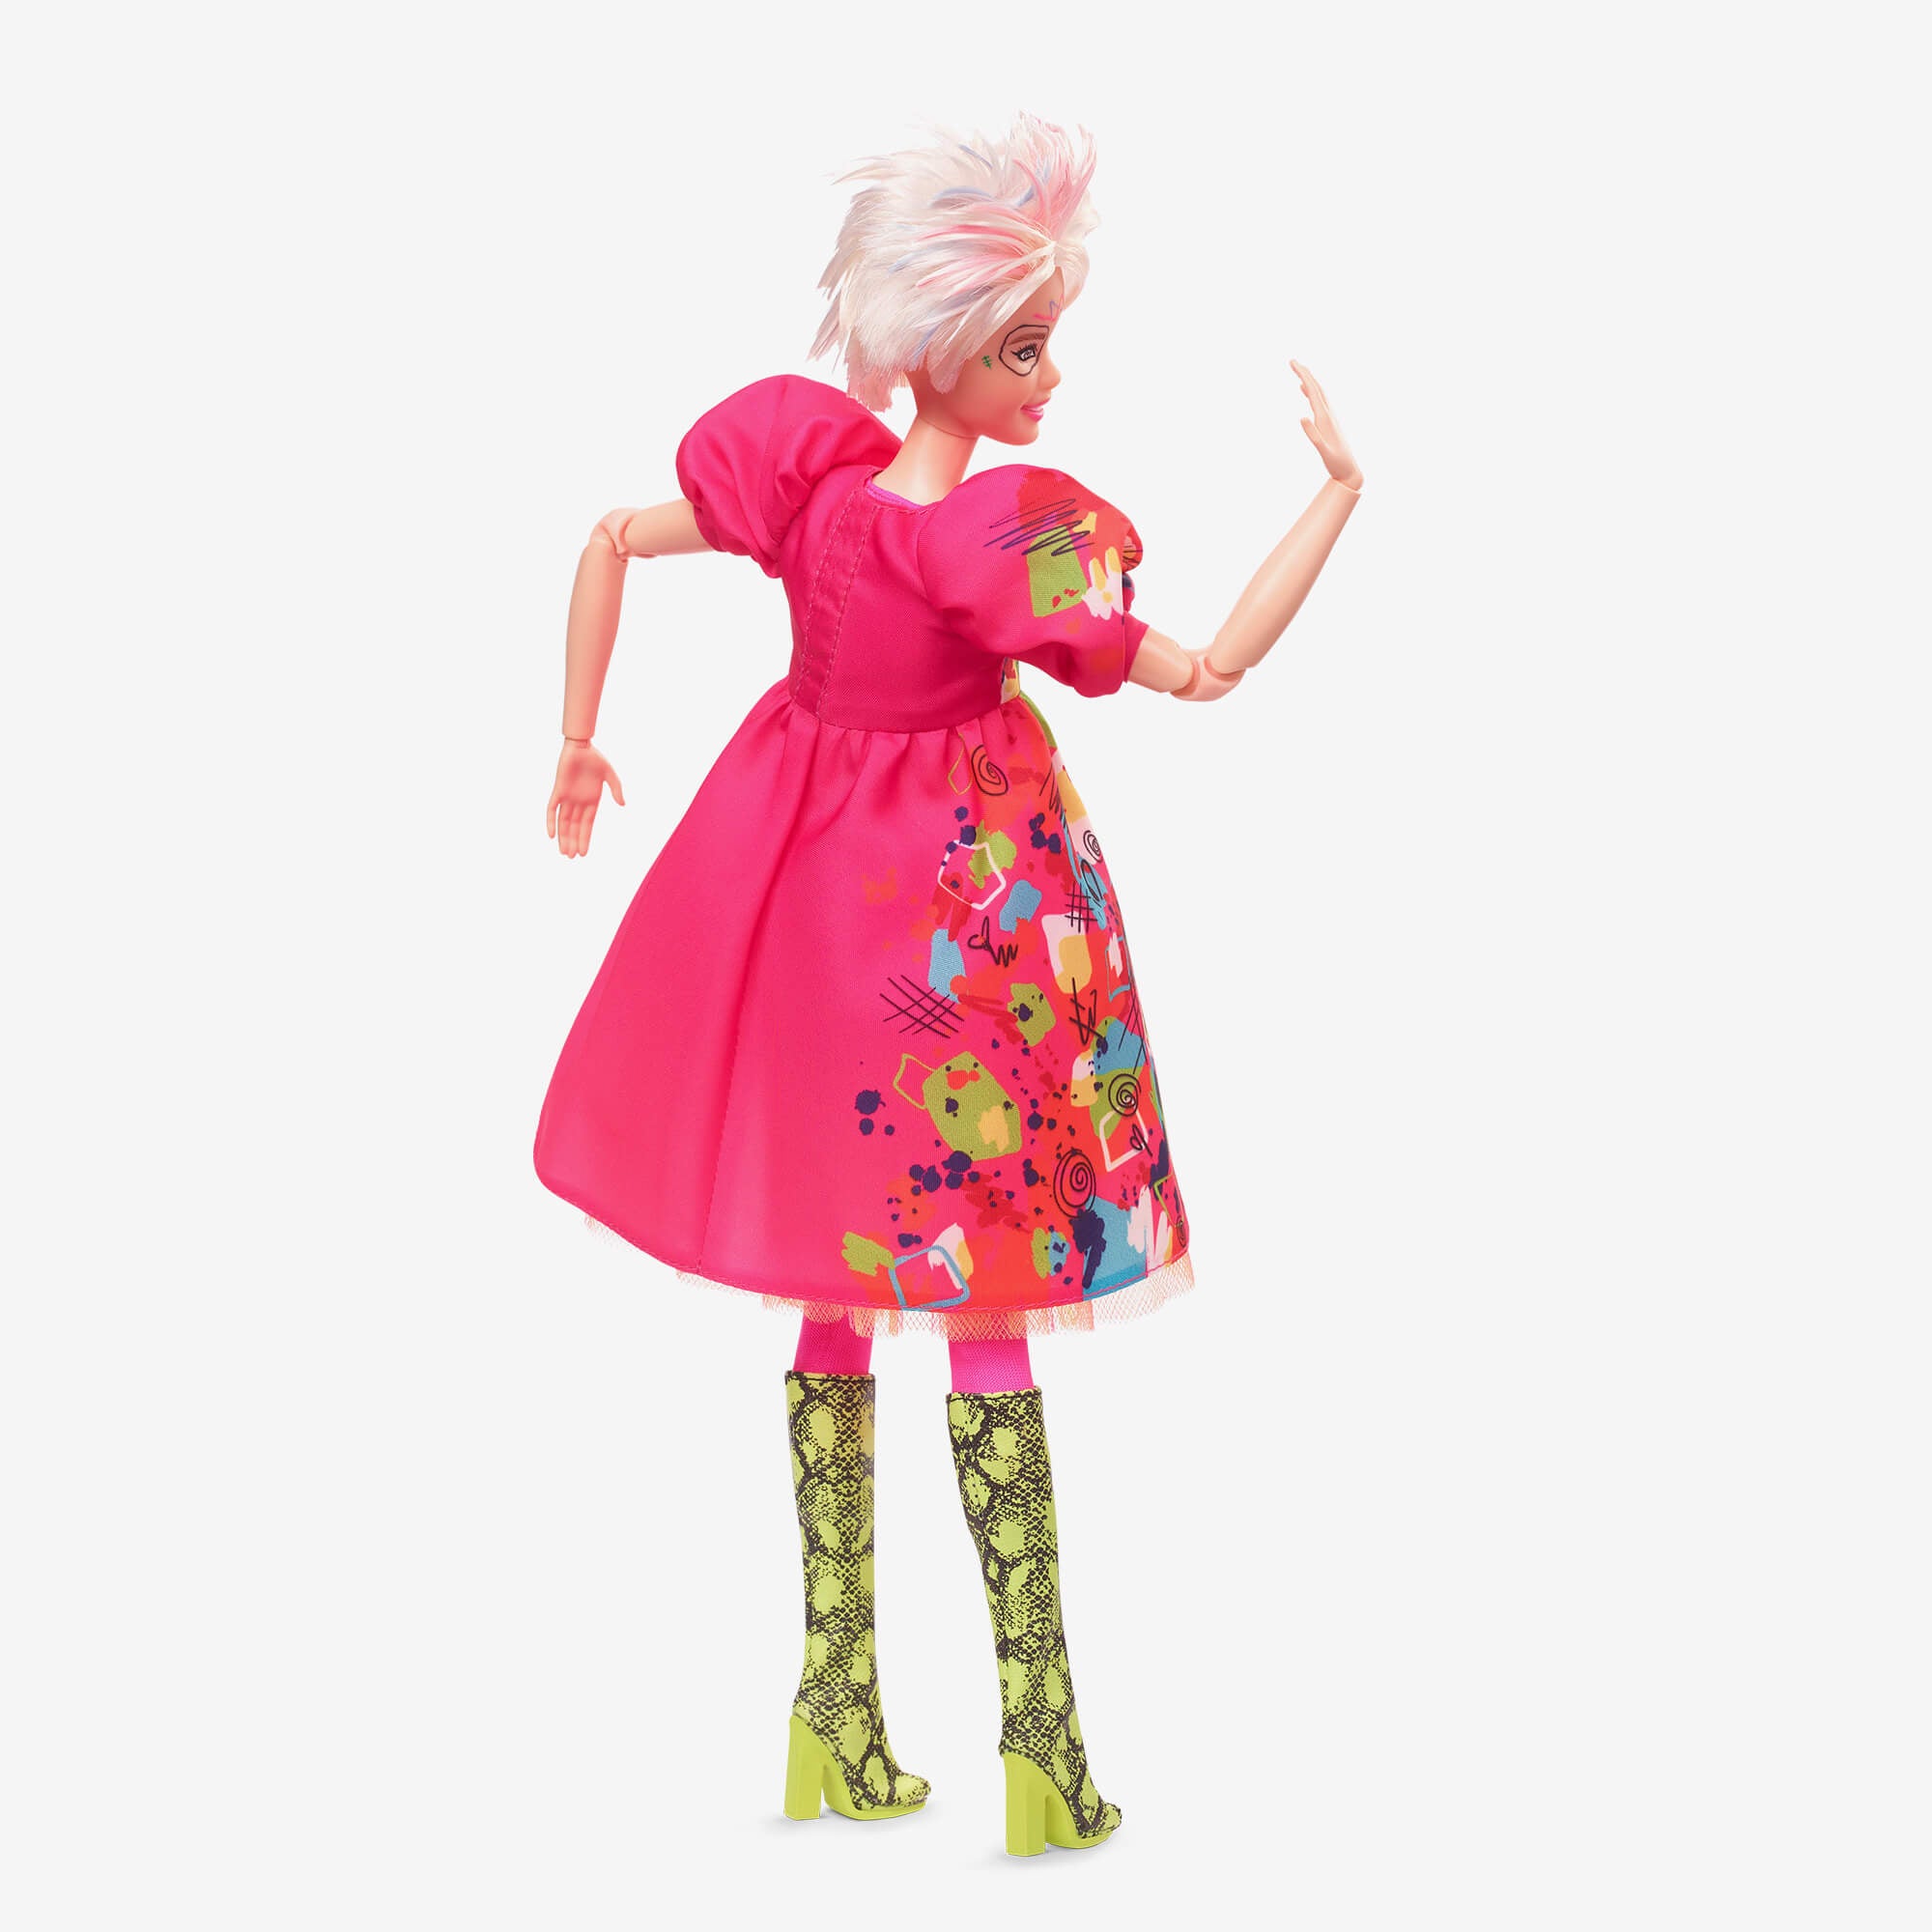 Mattel unveils limited collection 'Weird Barbie' doll